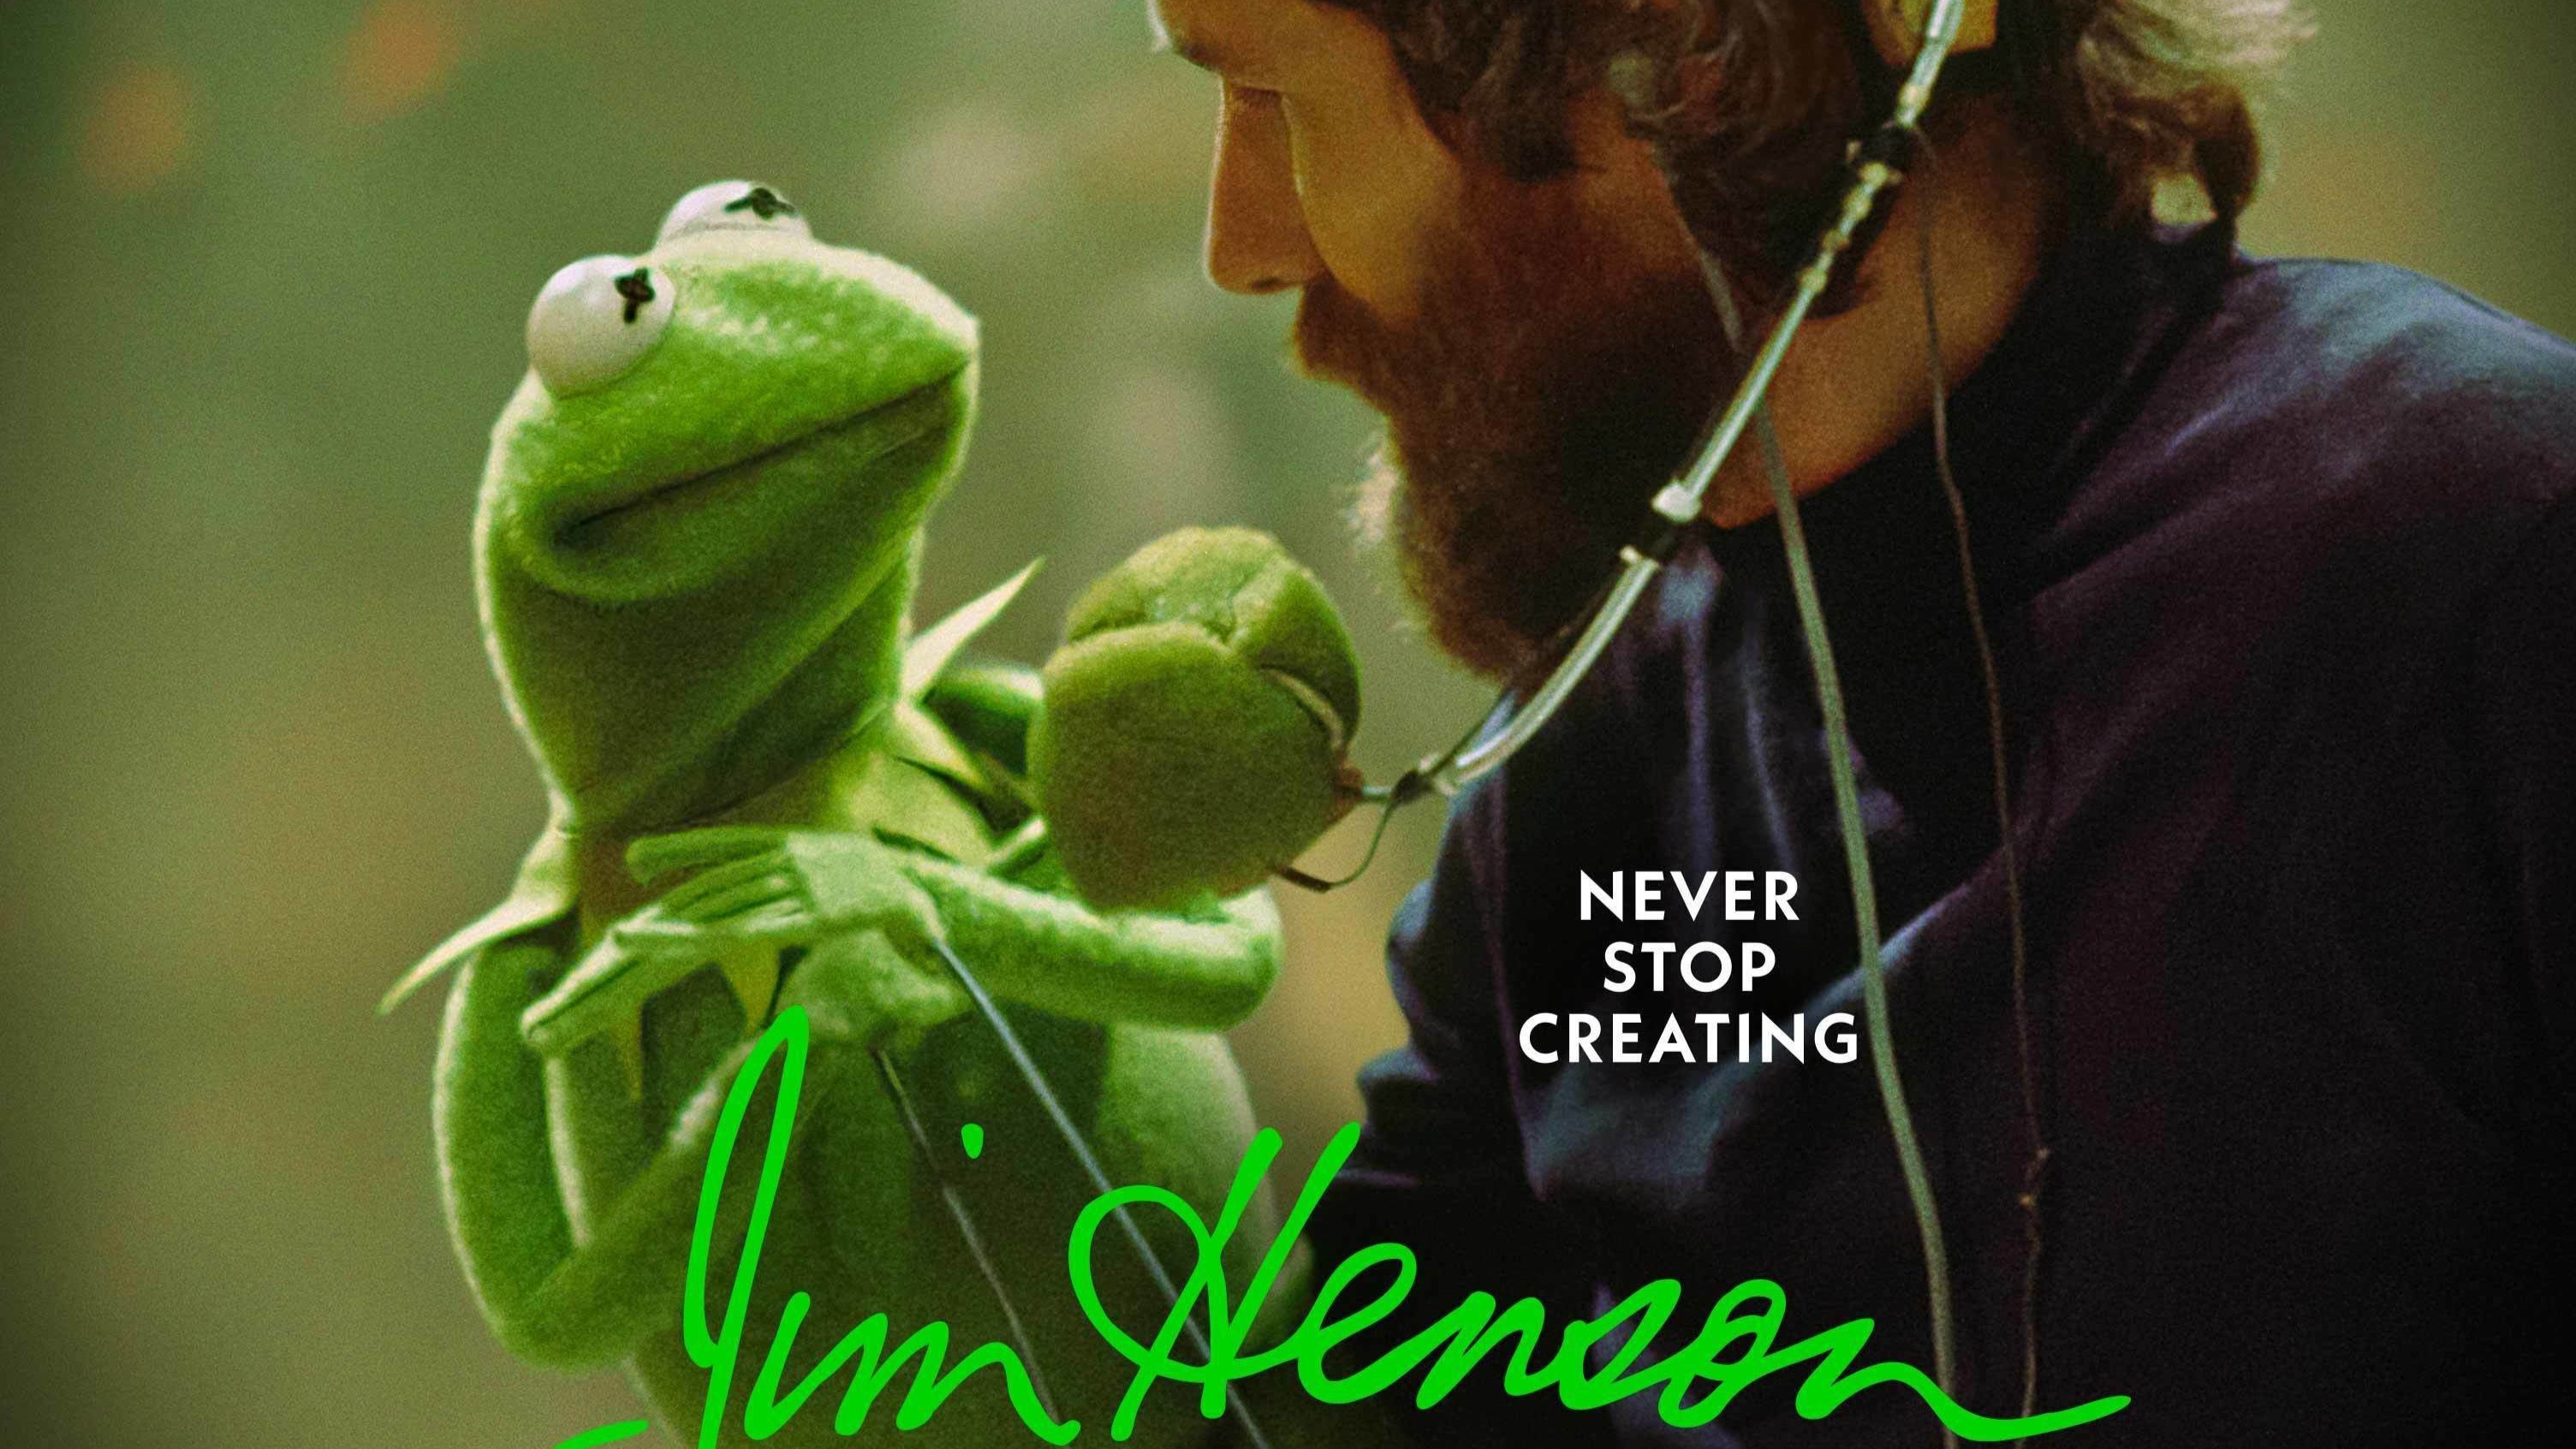 Documentary honours Kermit the Frog, Sesame Street creator and pioneer